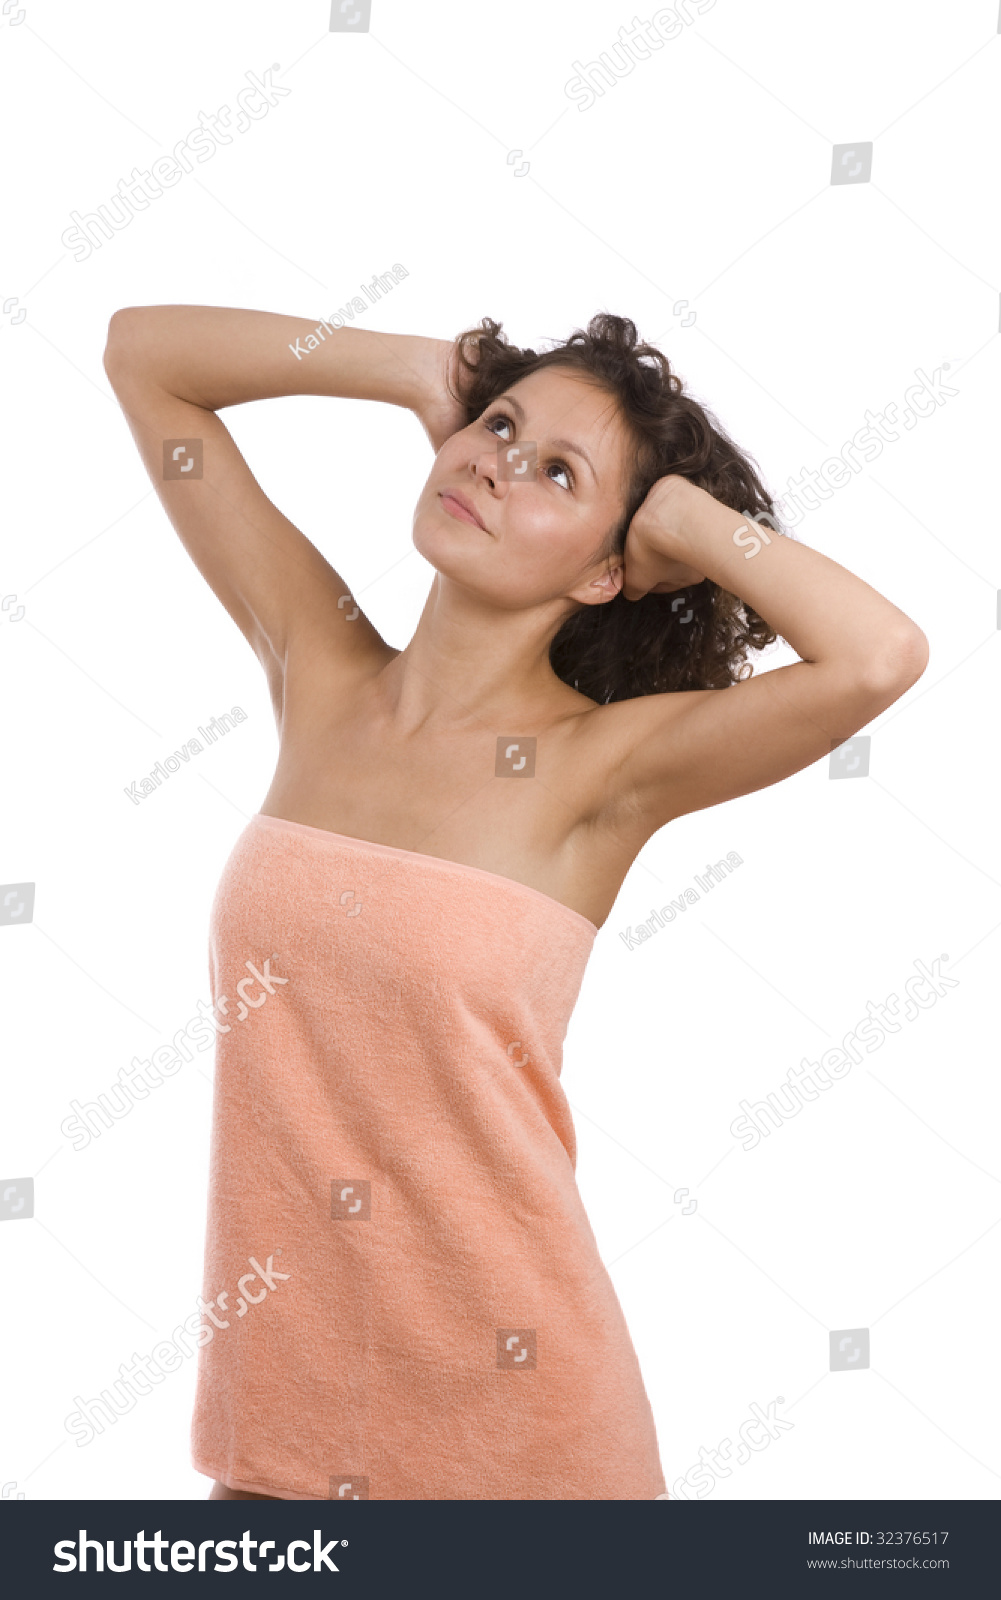 carol zou add sexy girl in towel photo